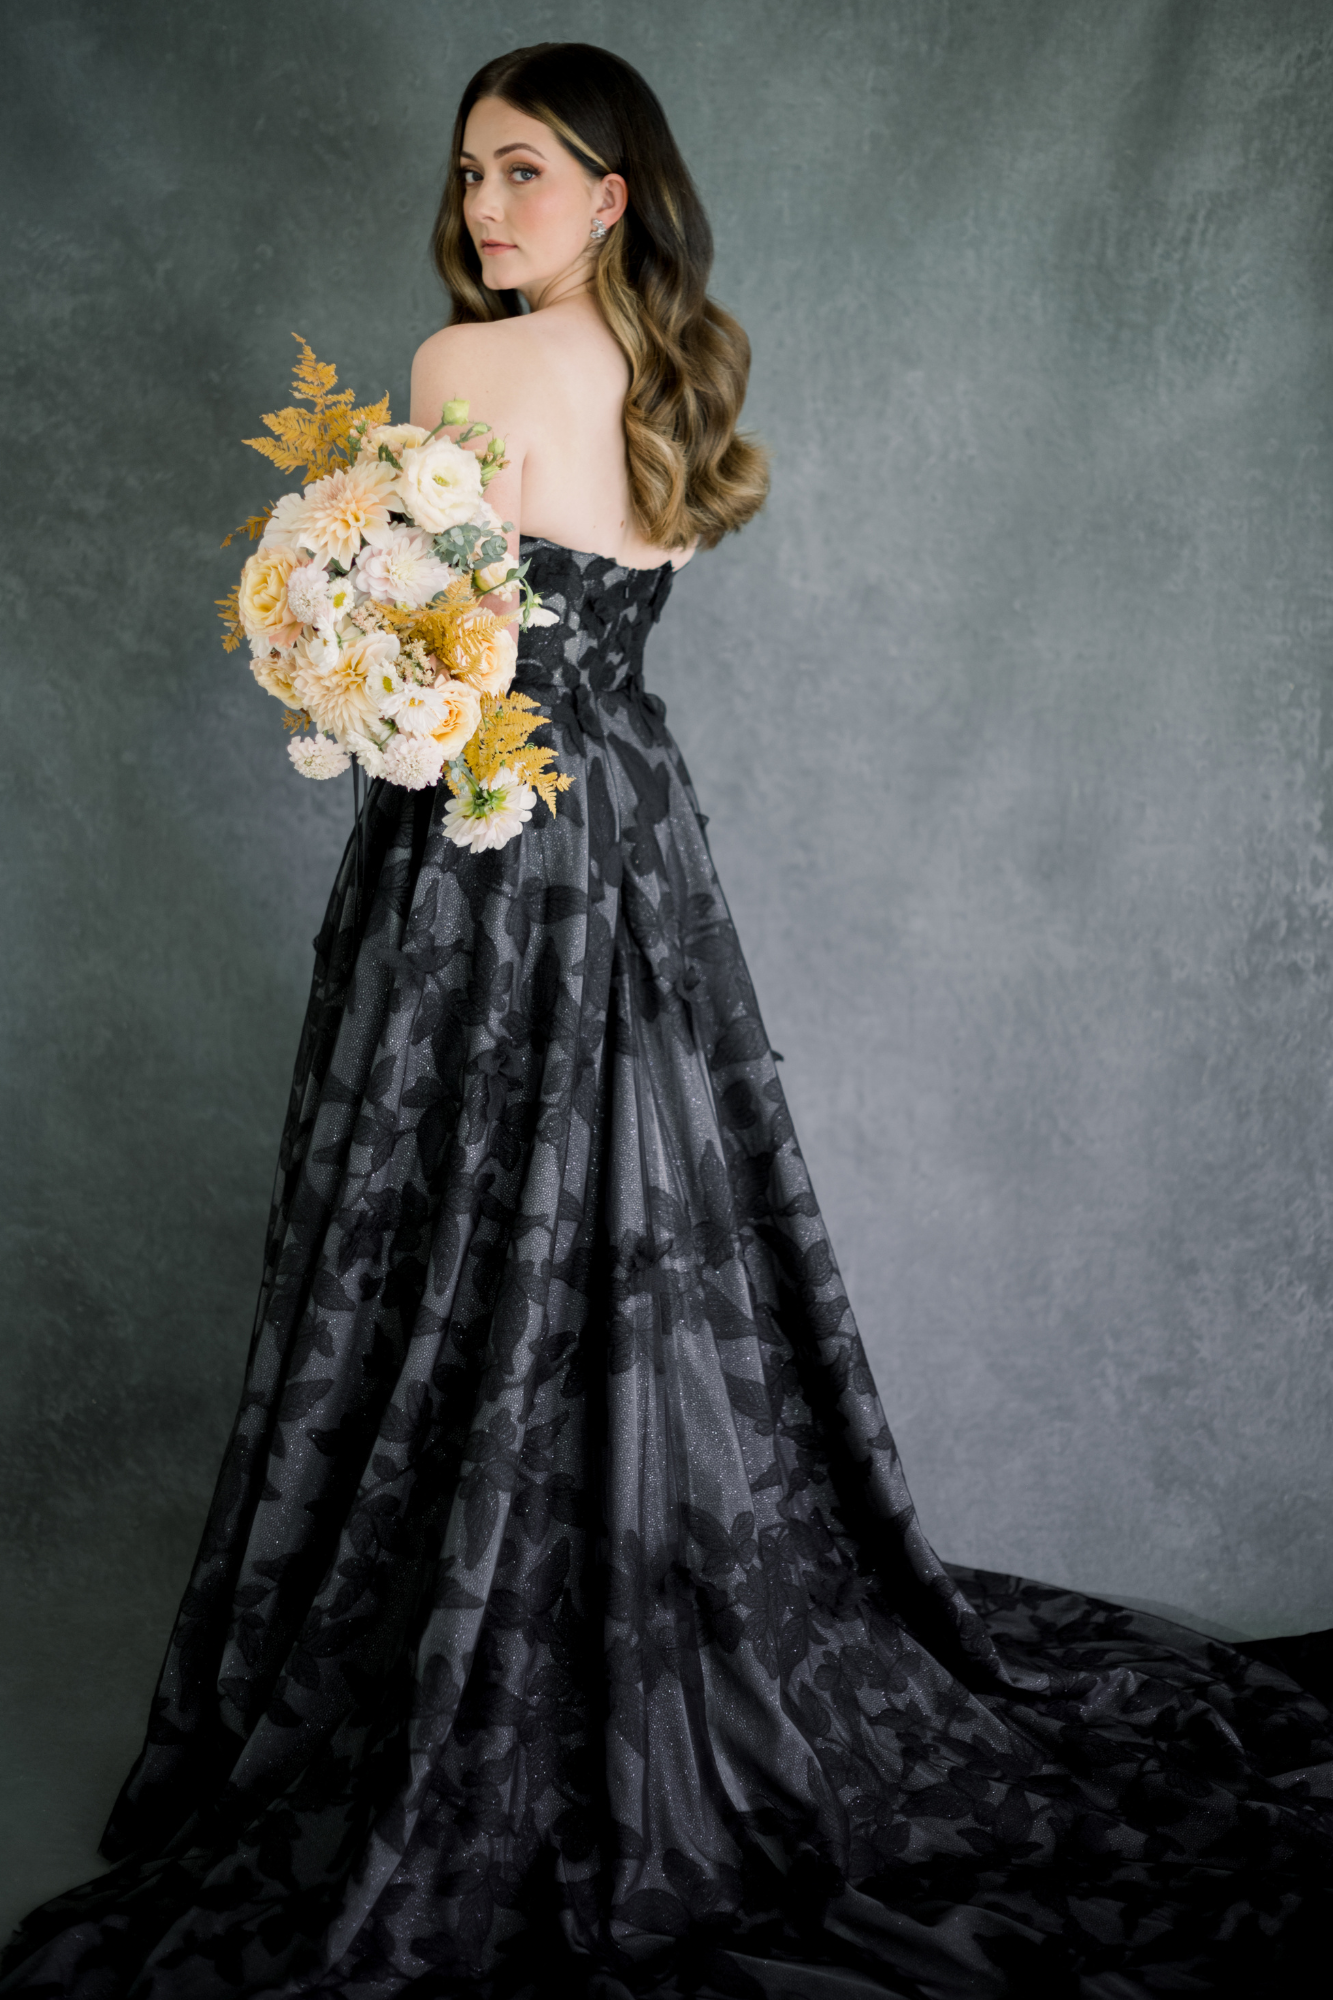 Model wears black wedding dress in a magazine photoshoot.